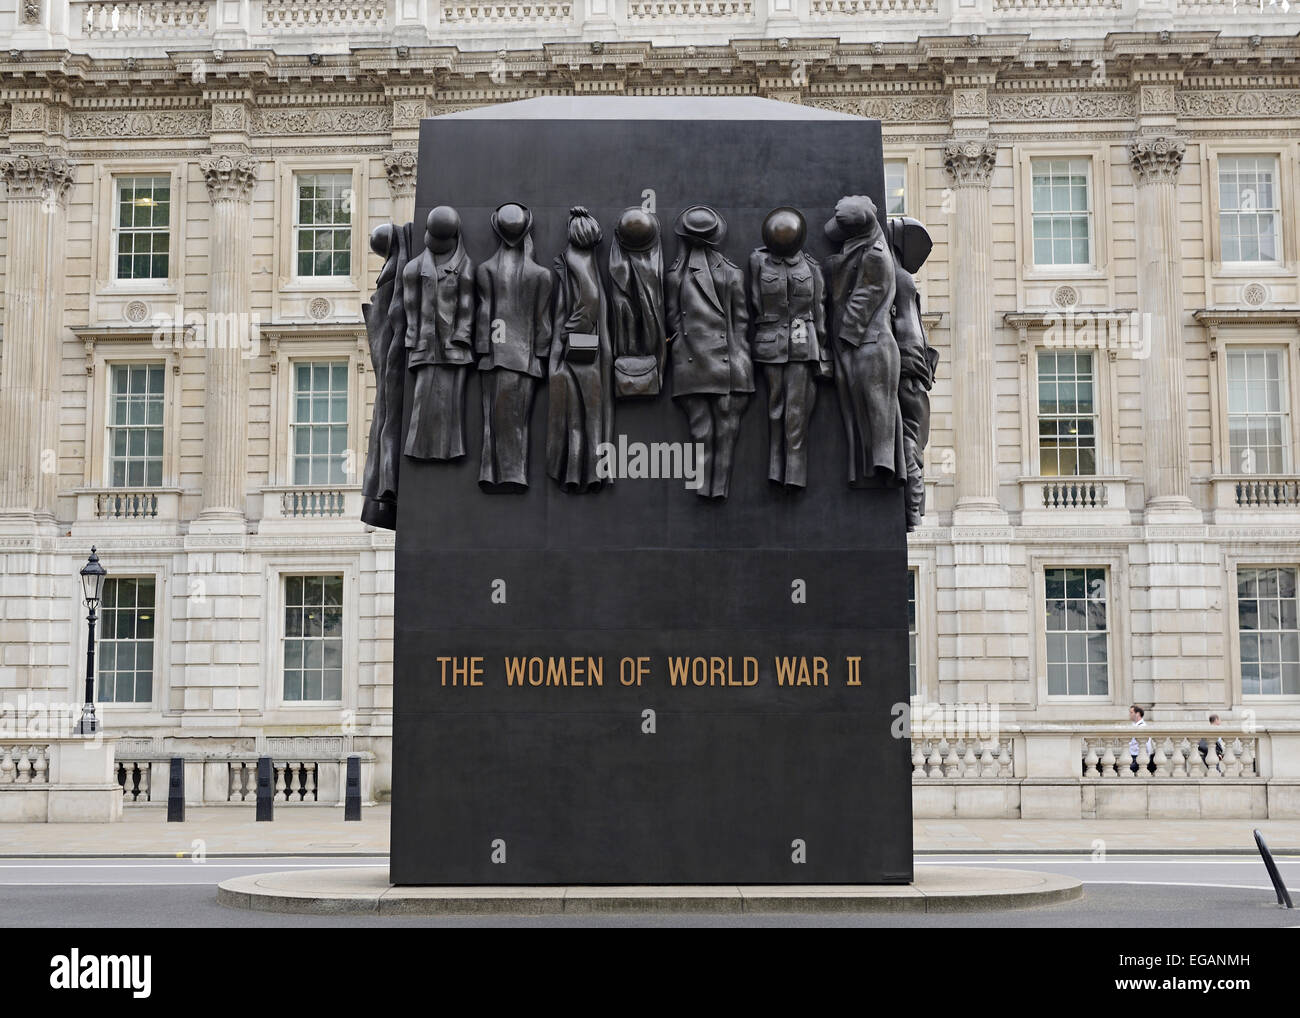 Monument to the Women of World War II, Whitehall, London, UK. Stock Photo